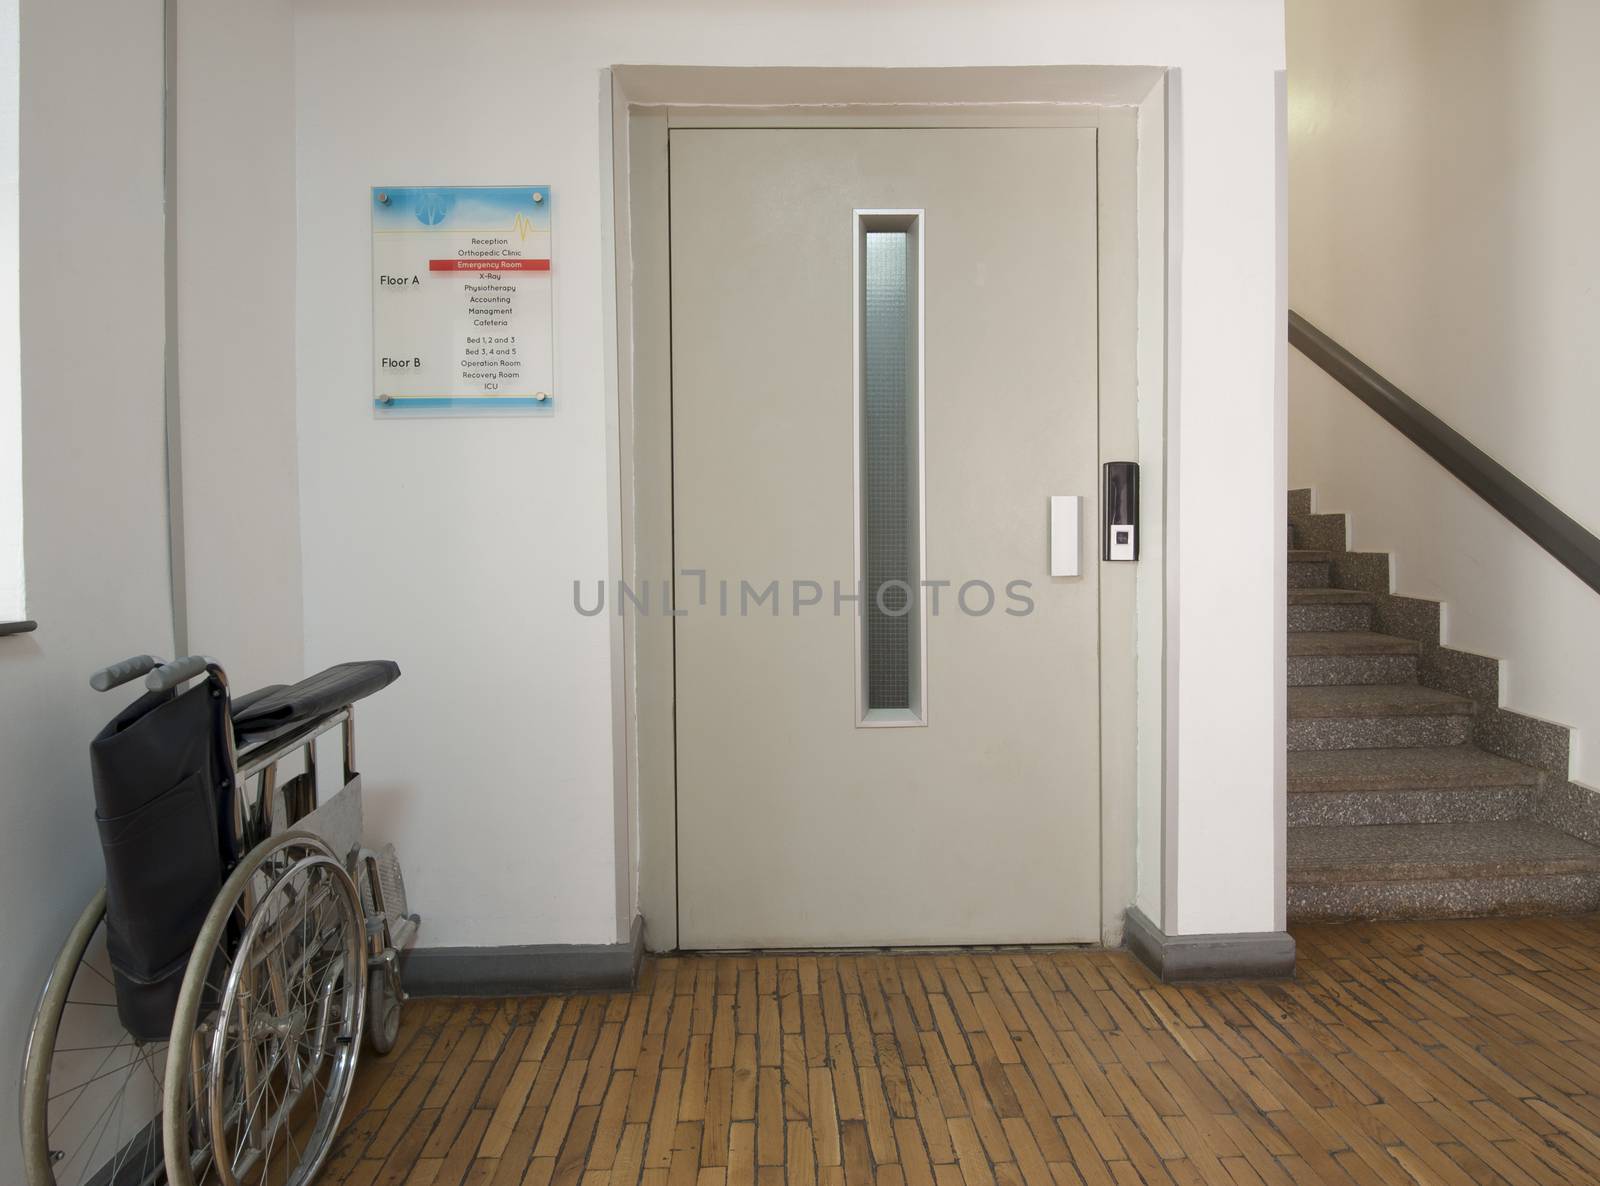 Entrance foyer in medical centre by paulvinten